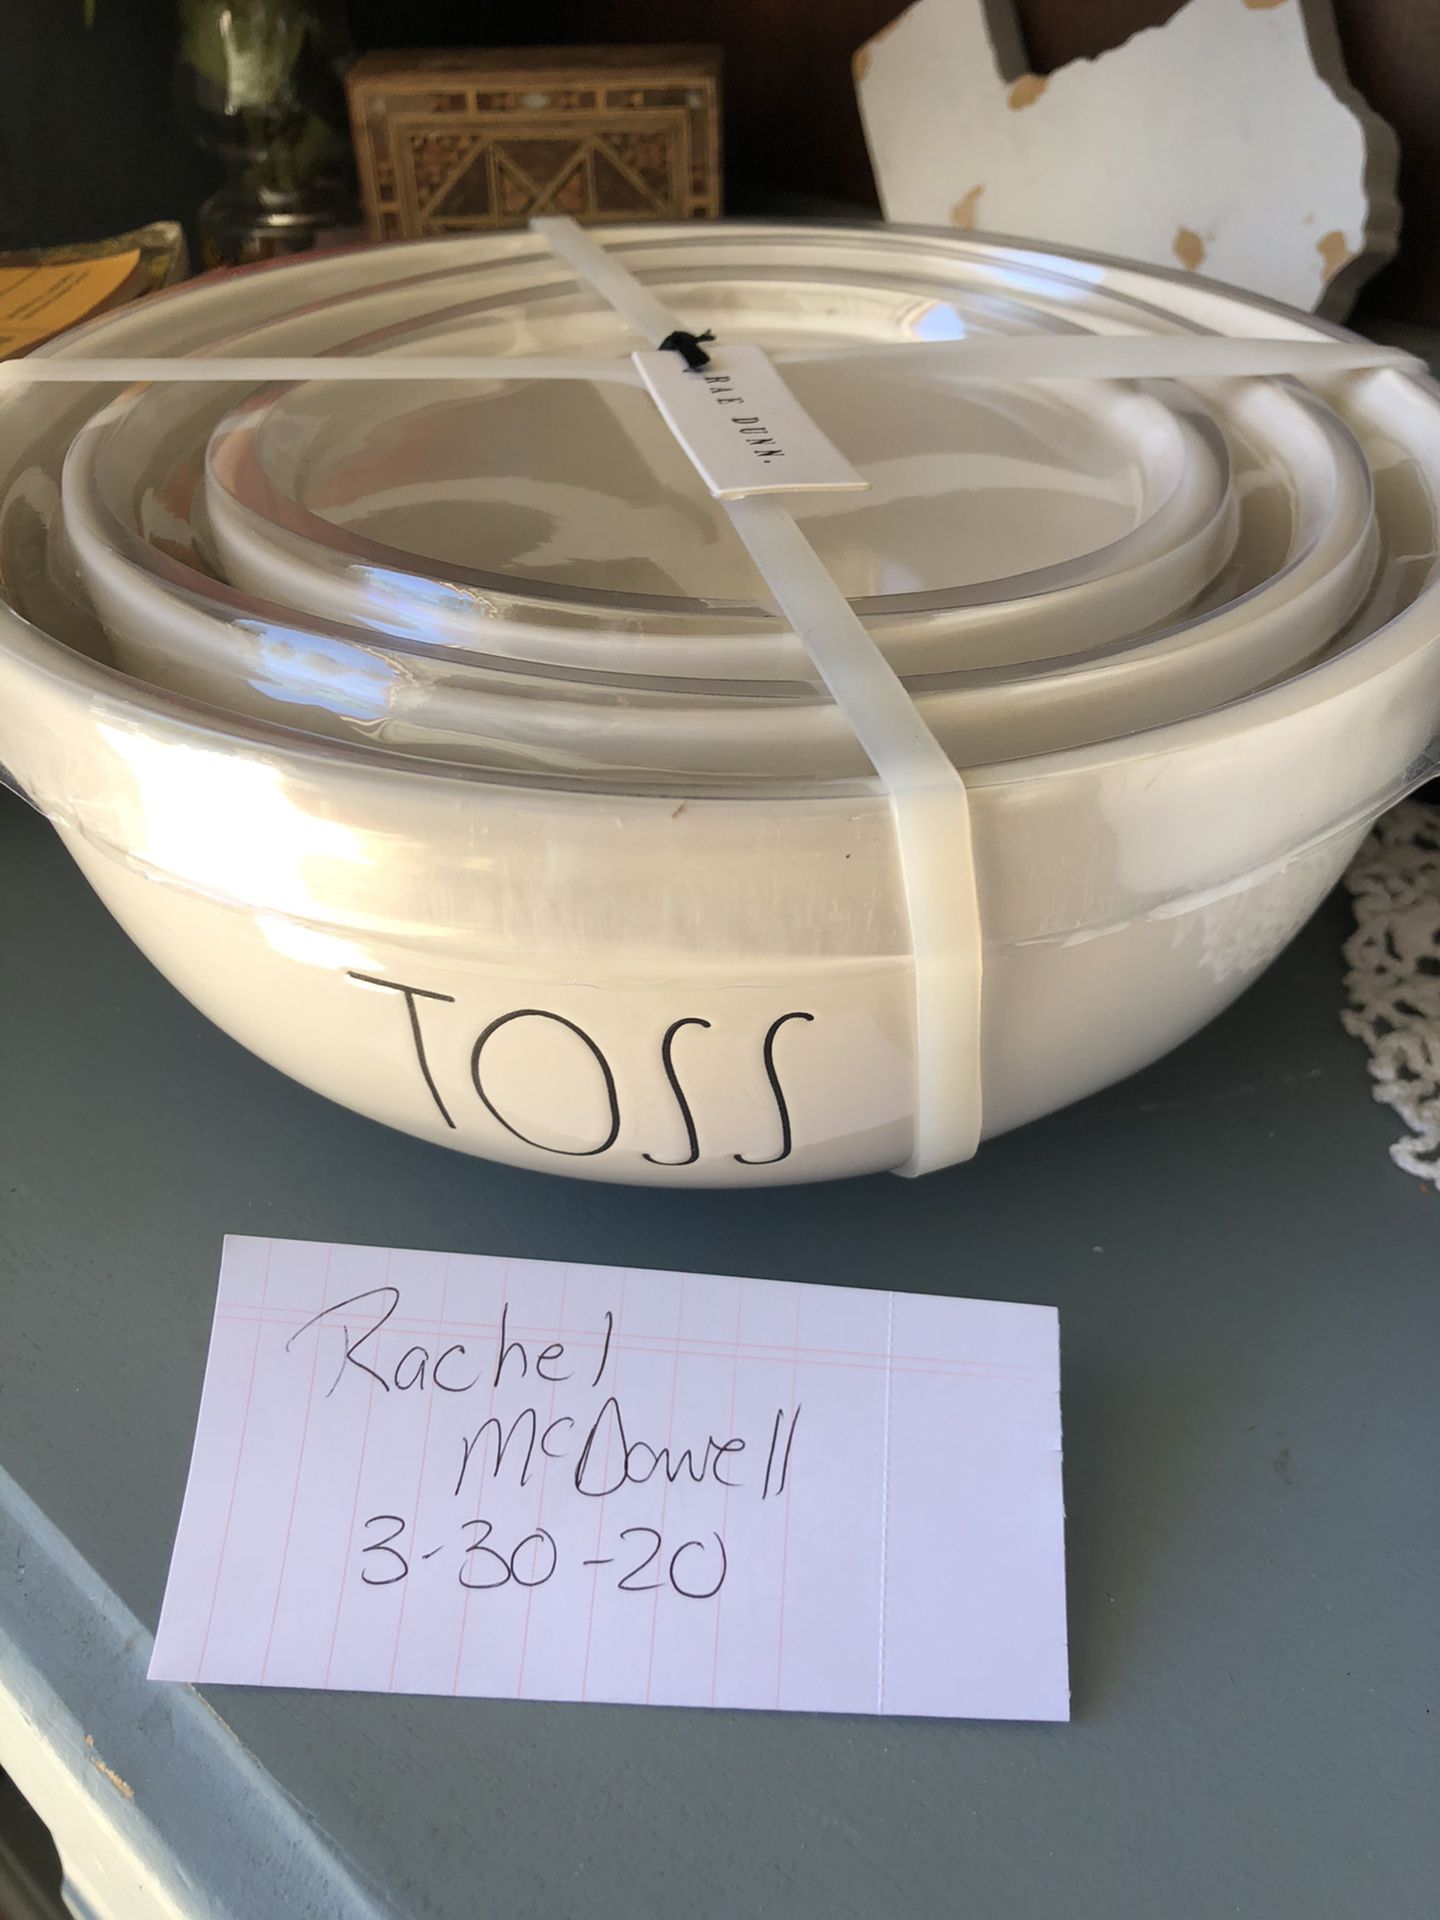 New 3 pc Toss mixing bowl set $25 local pick up / Ceramic